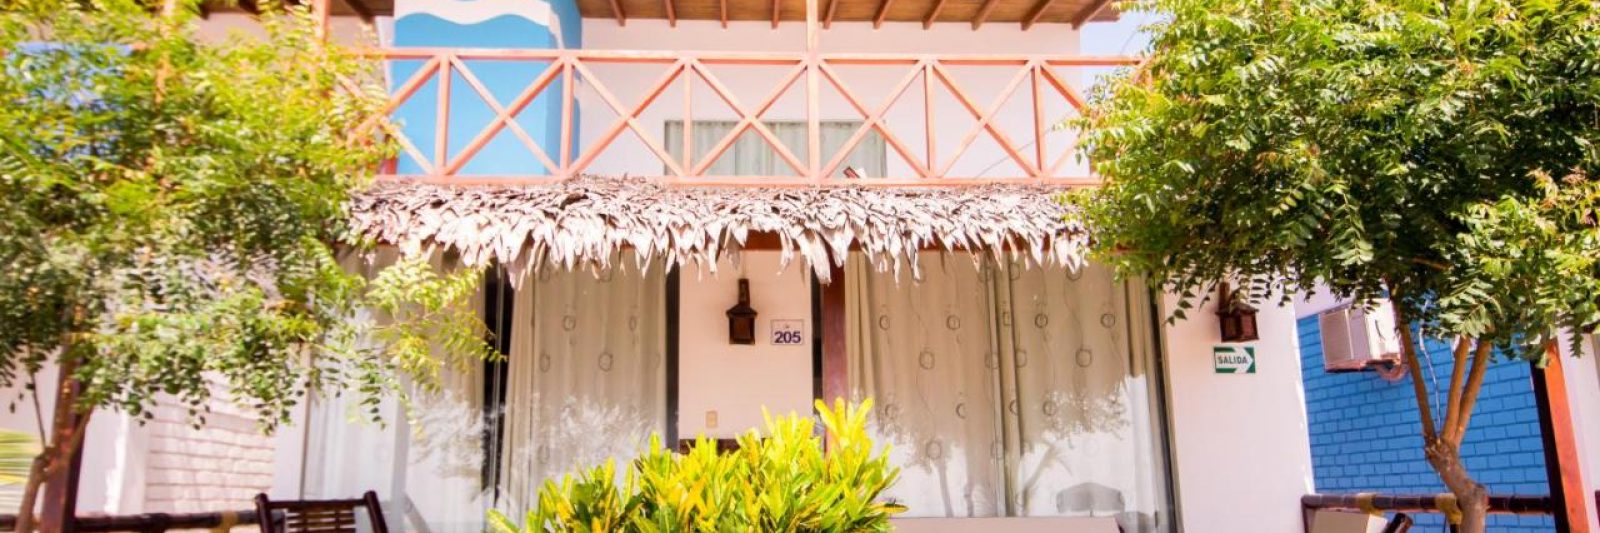 Hoteles en Tumbes - Nauti-K Beach Hotel - bungalow familiar para 6 personas